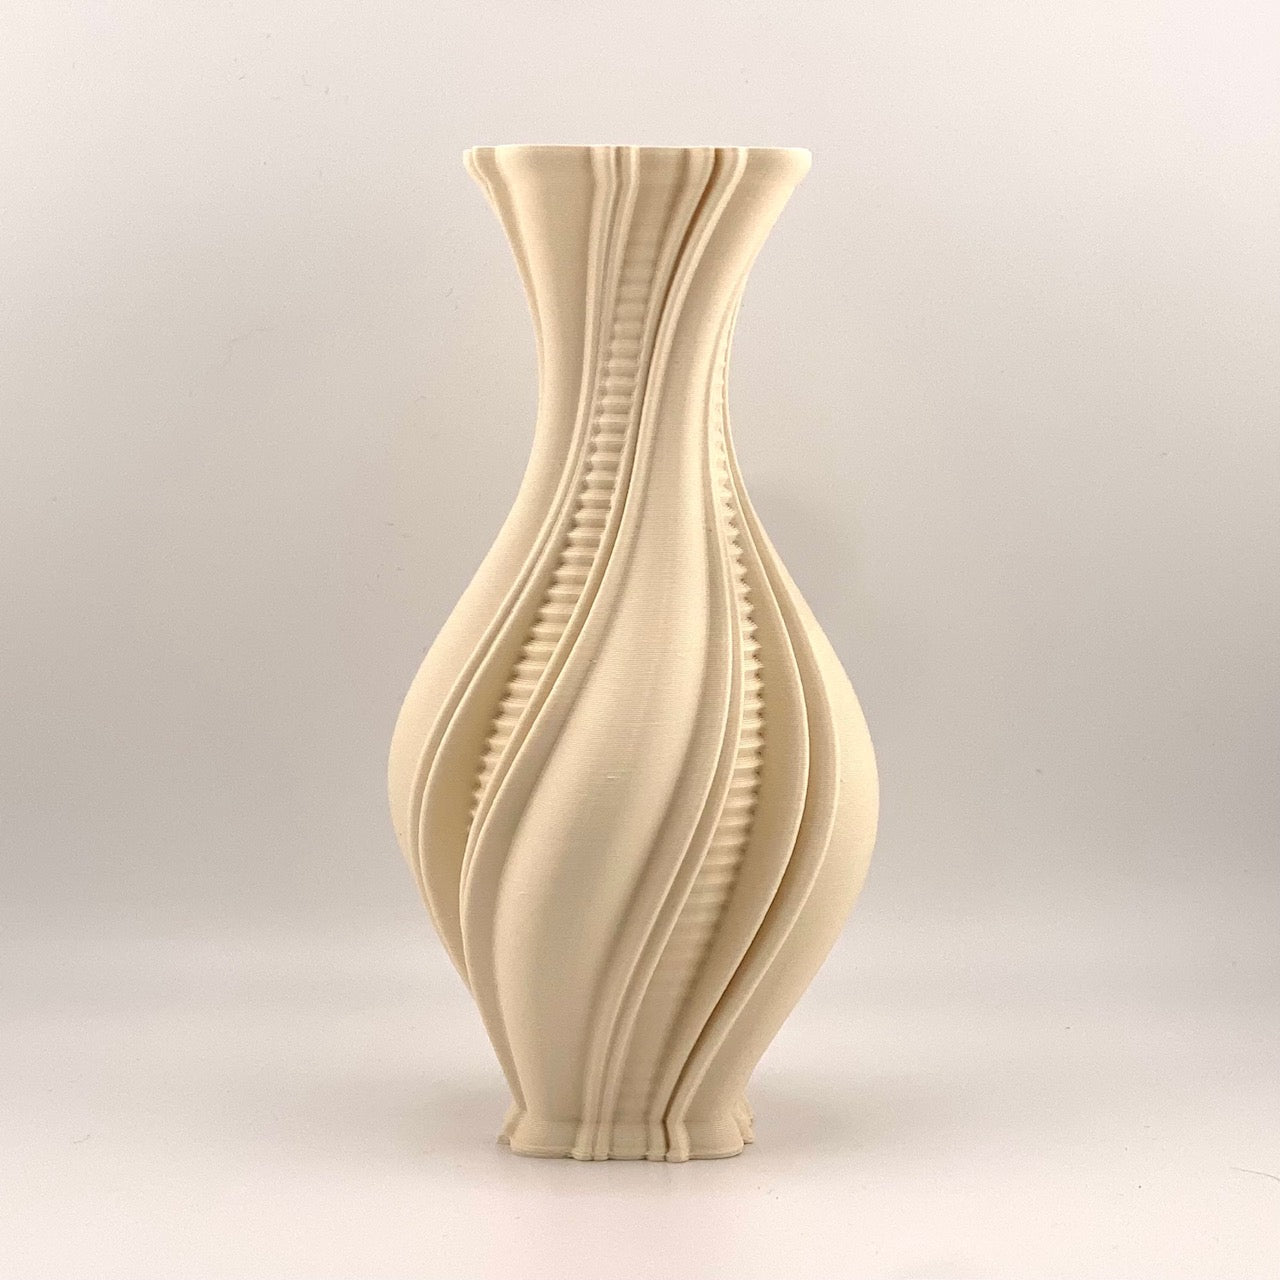 Resplendence Vase 3D printed in Ivory glossy filament